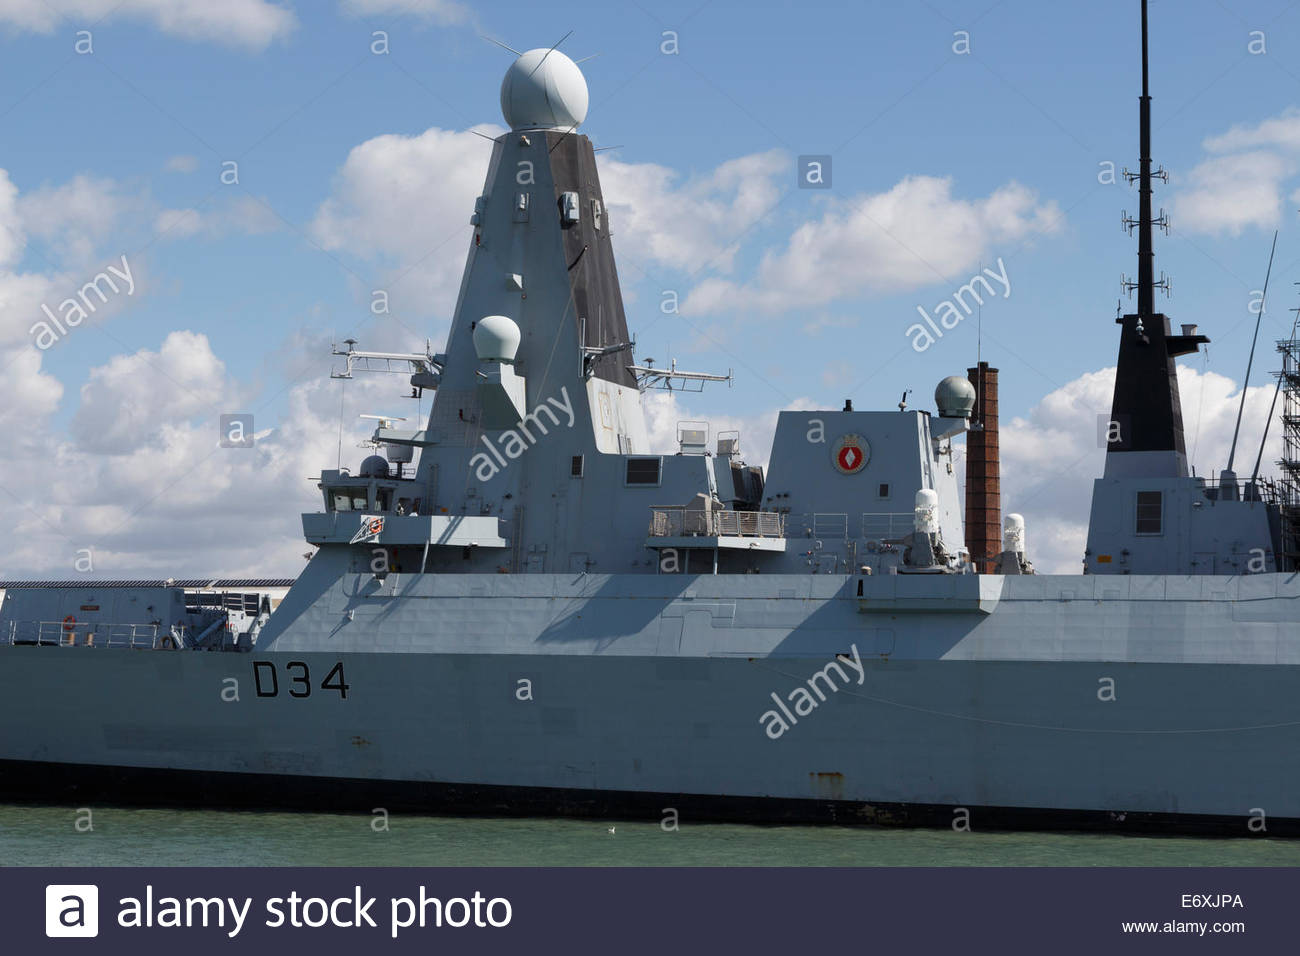 hms-diamond-d34-type-45-daring-class-air-defence-portsmouth-docks-E6XJPA.jpg